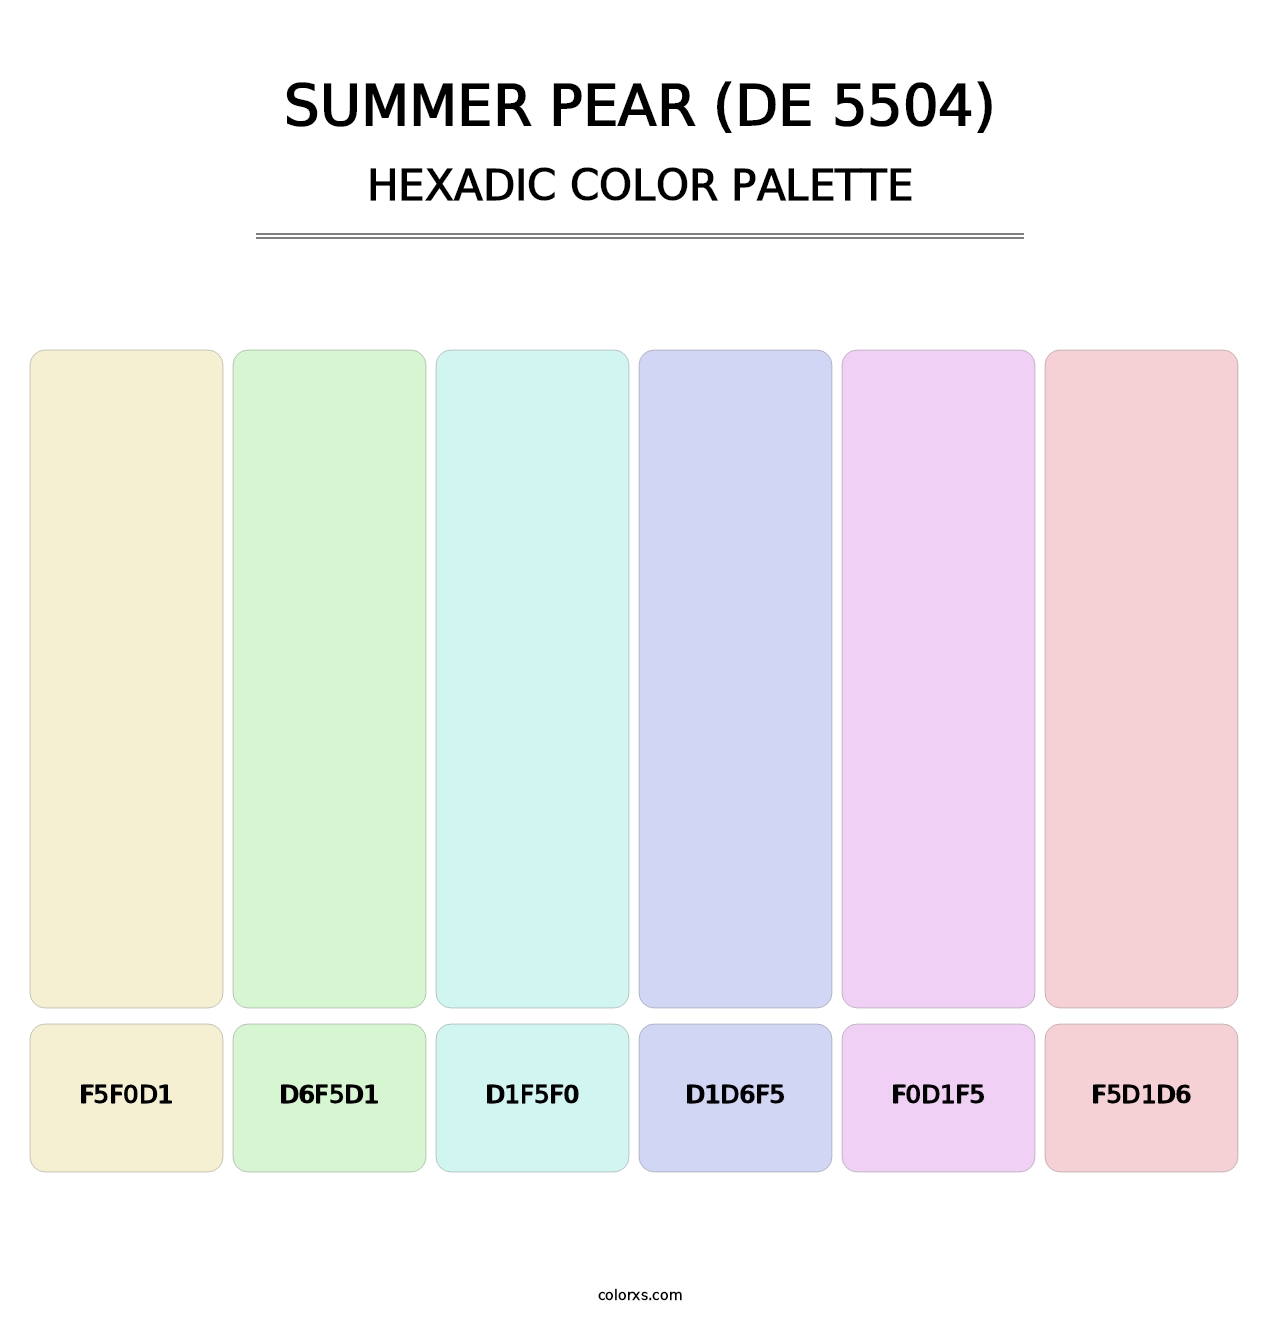 Summer Pear (DE 5504) - Hexadic Color Palette